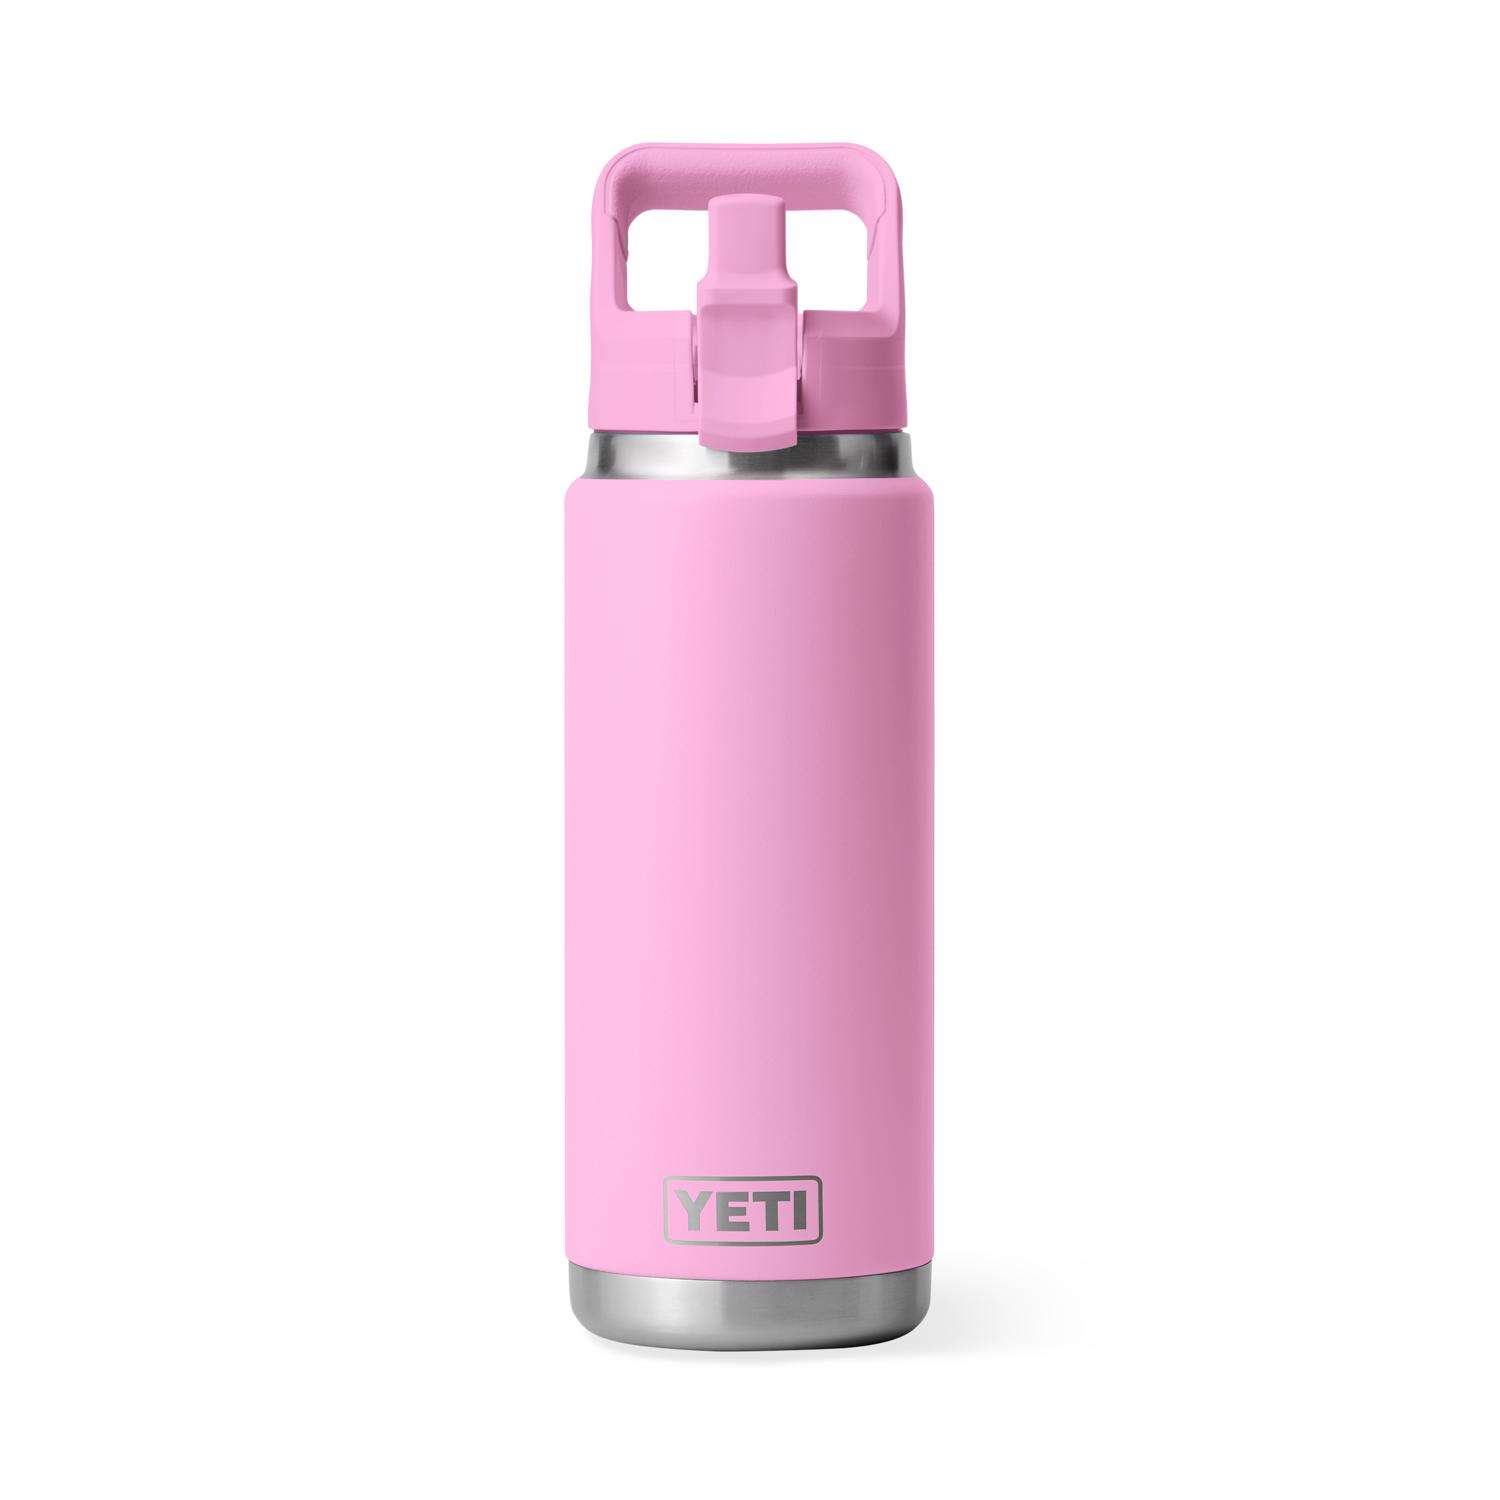 Yeti Rambler 26 oz Bottle with Straw Cap Power Pink - 21071501923